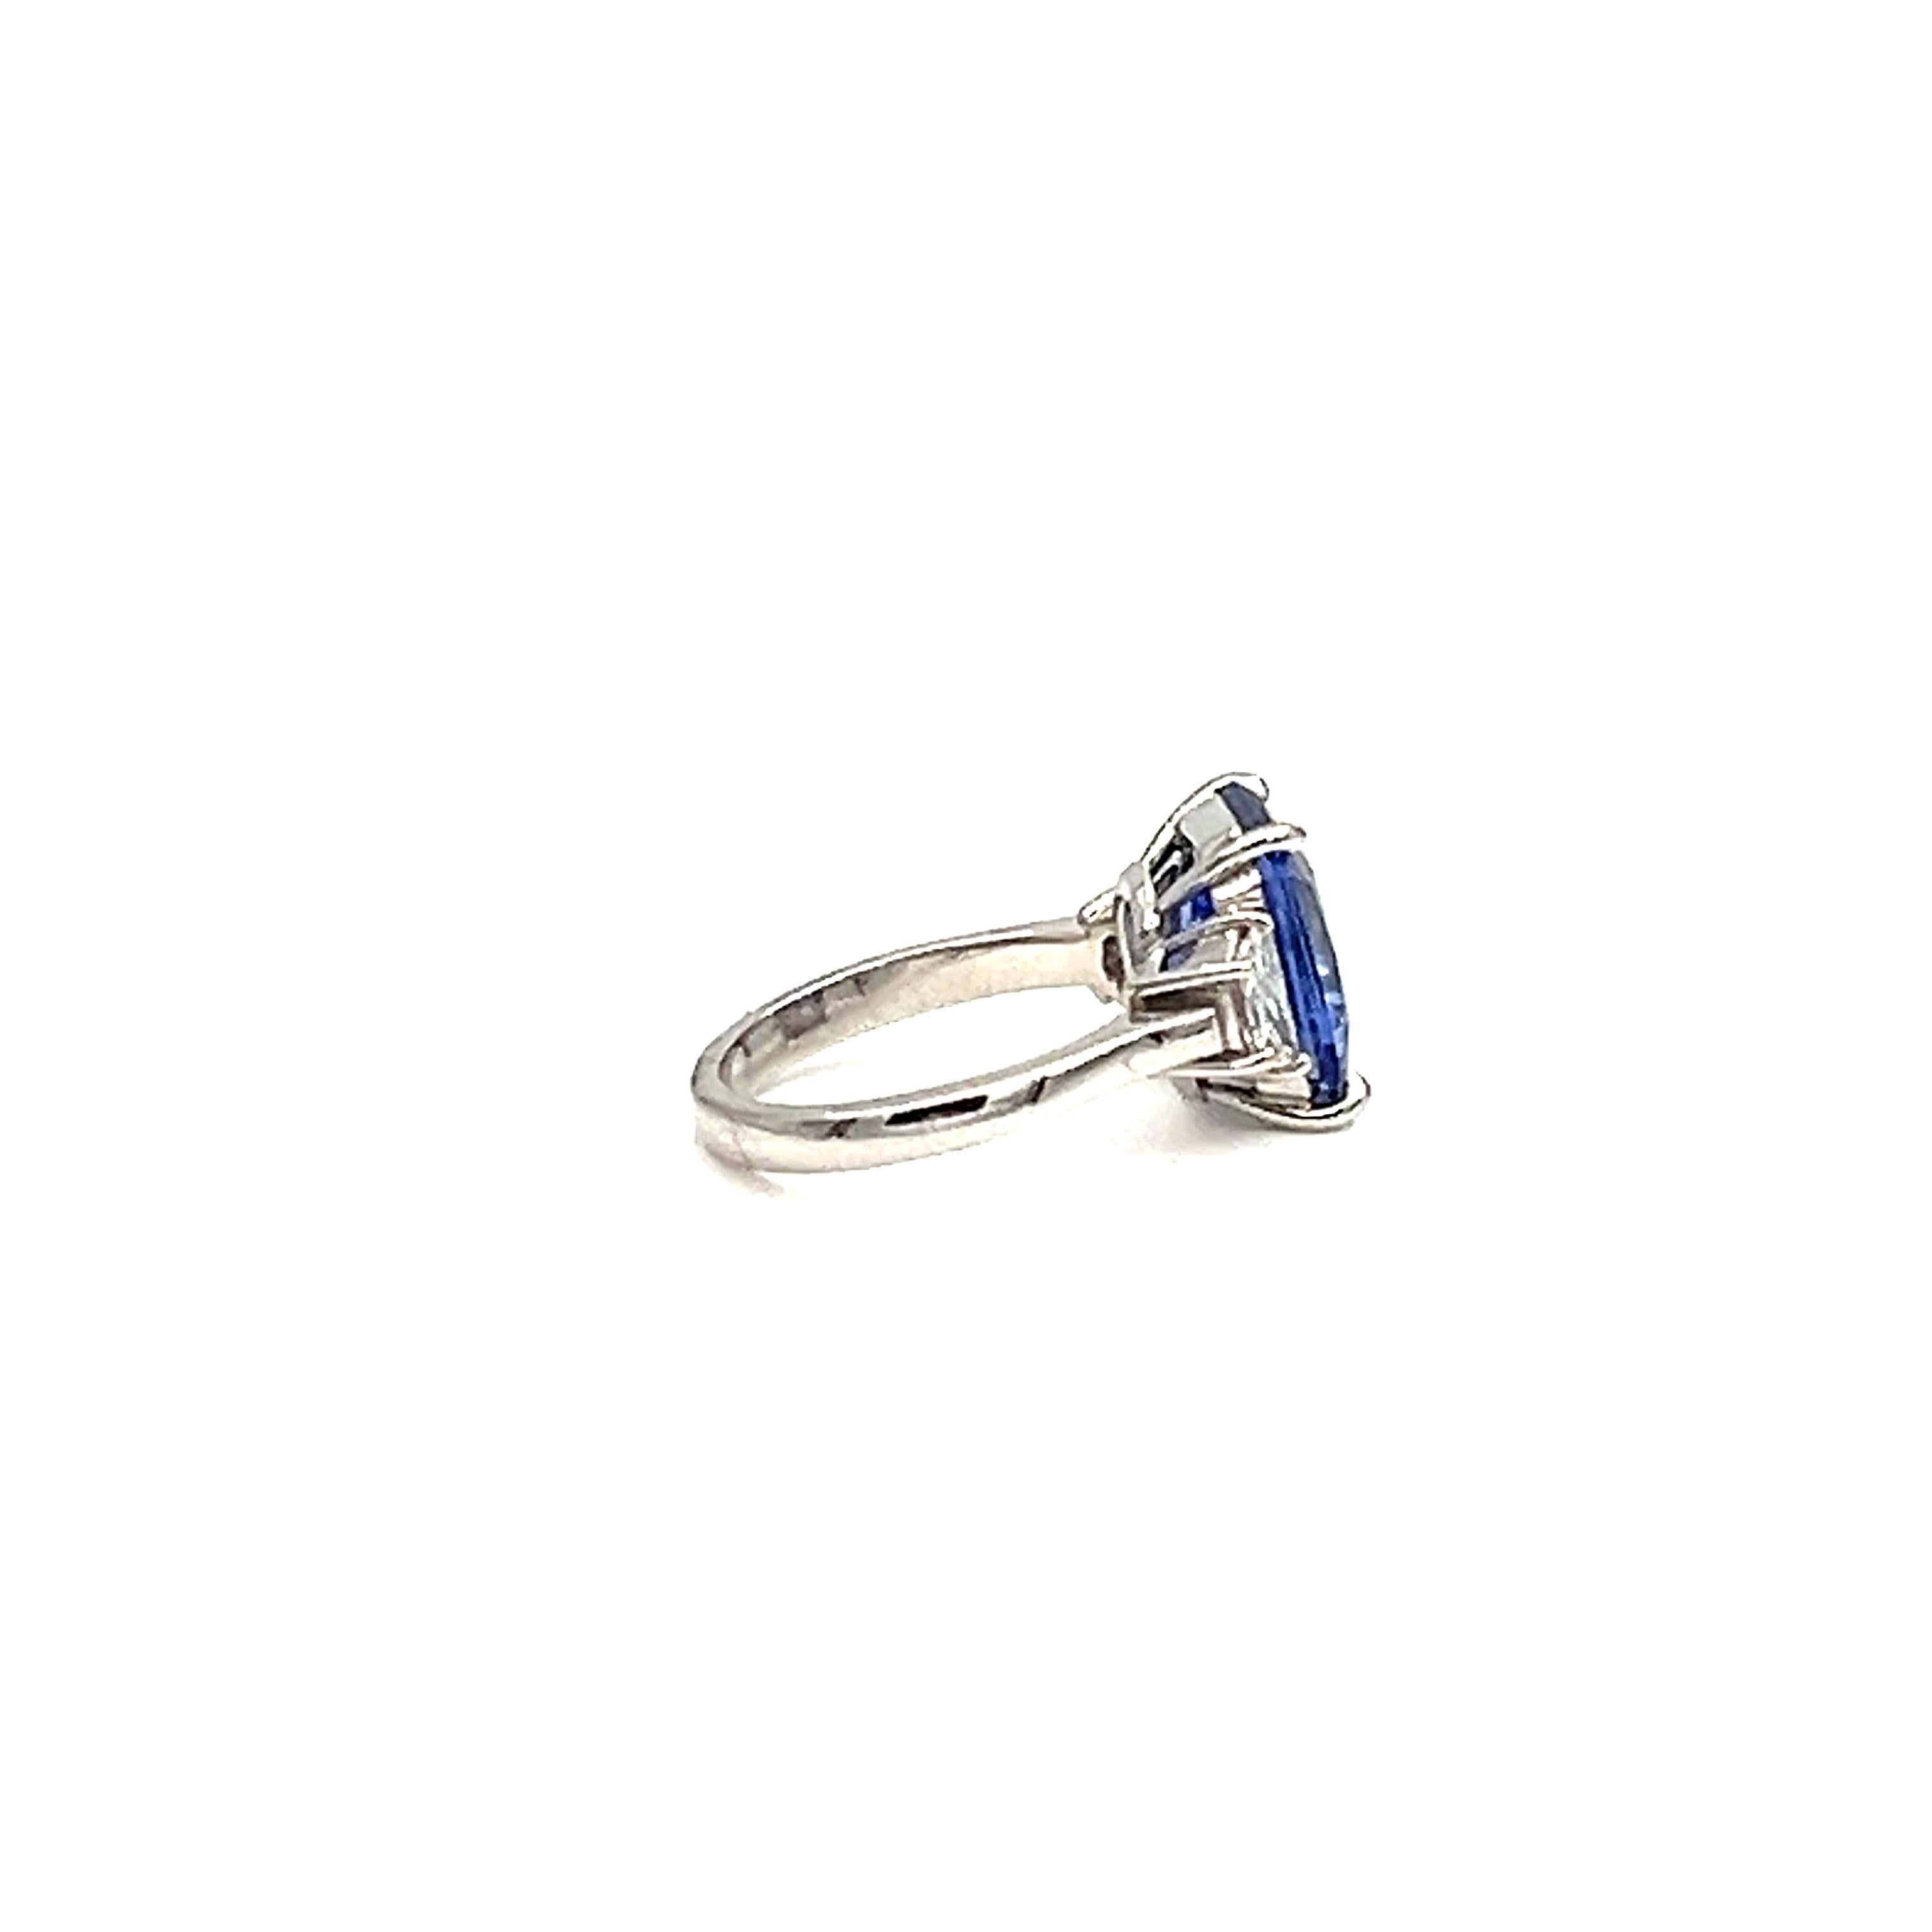 7.45 Carat Ceylon Emerald Cut Sapphire & Diamond Ring For Sale 1